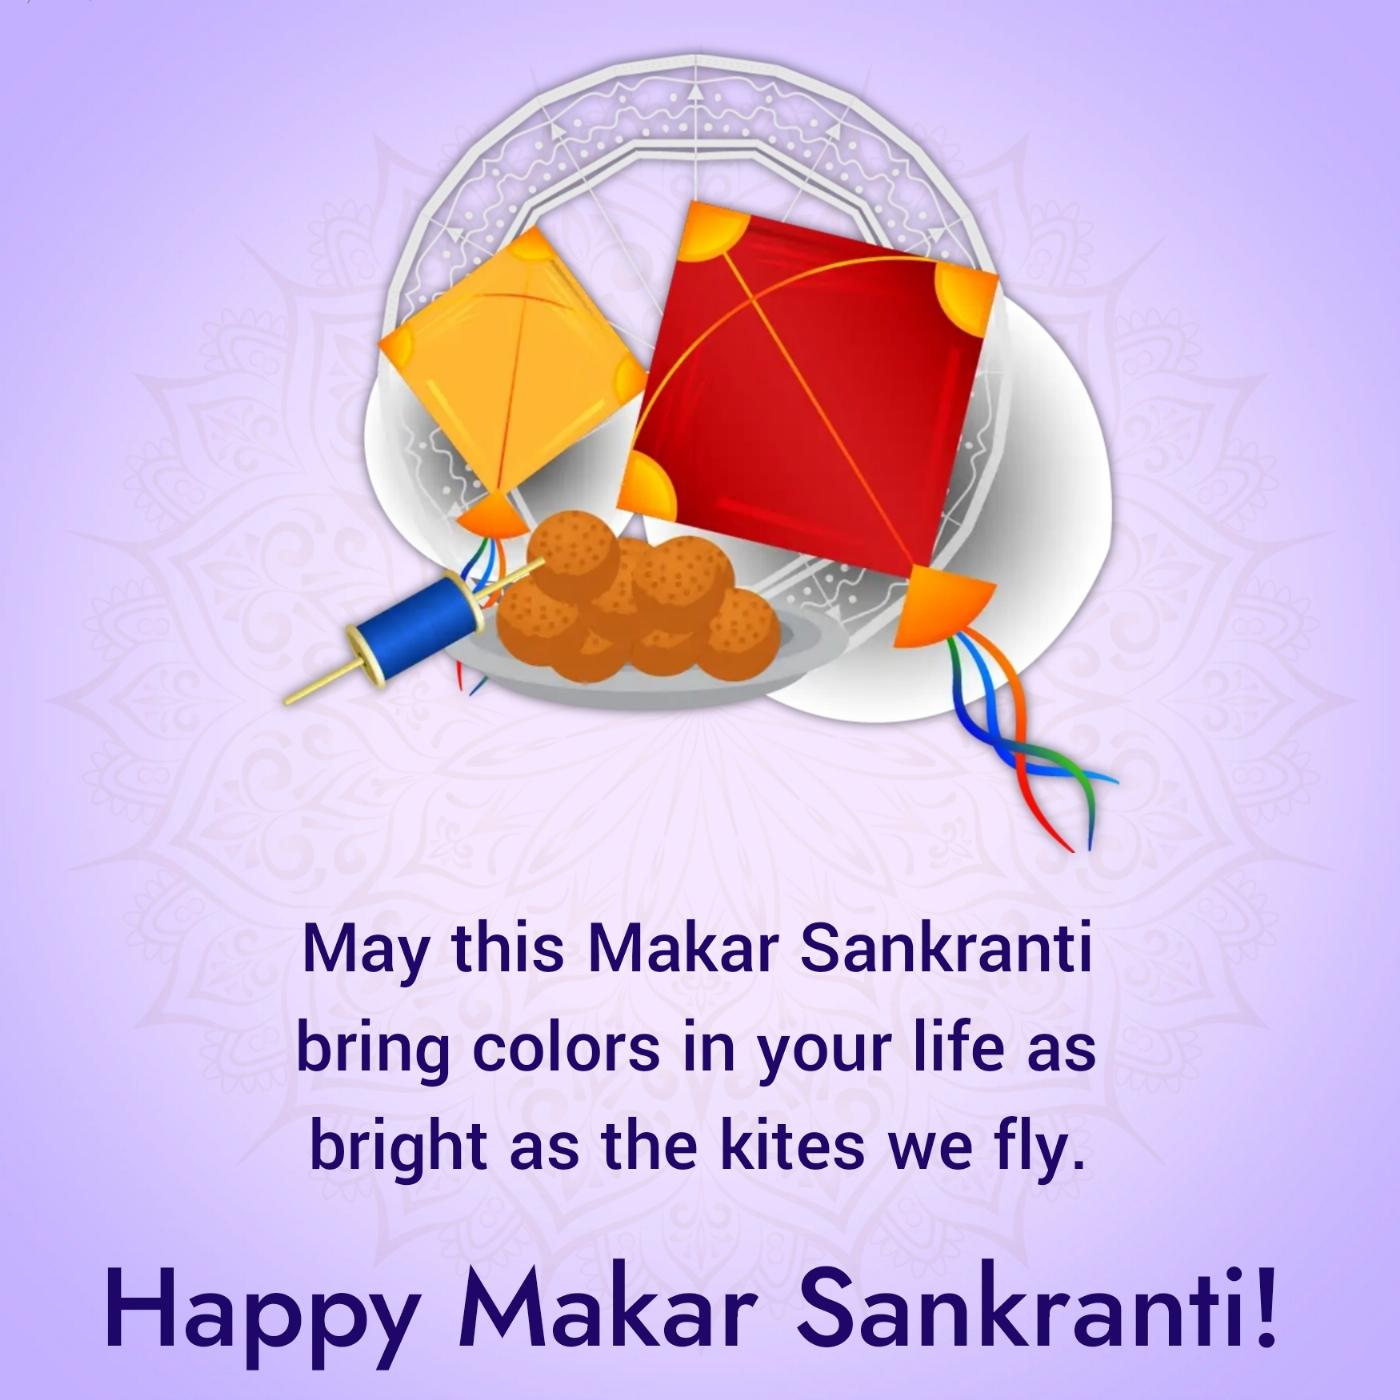 May this Makar Sankranti bring colors in your life